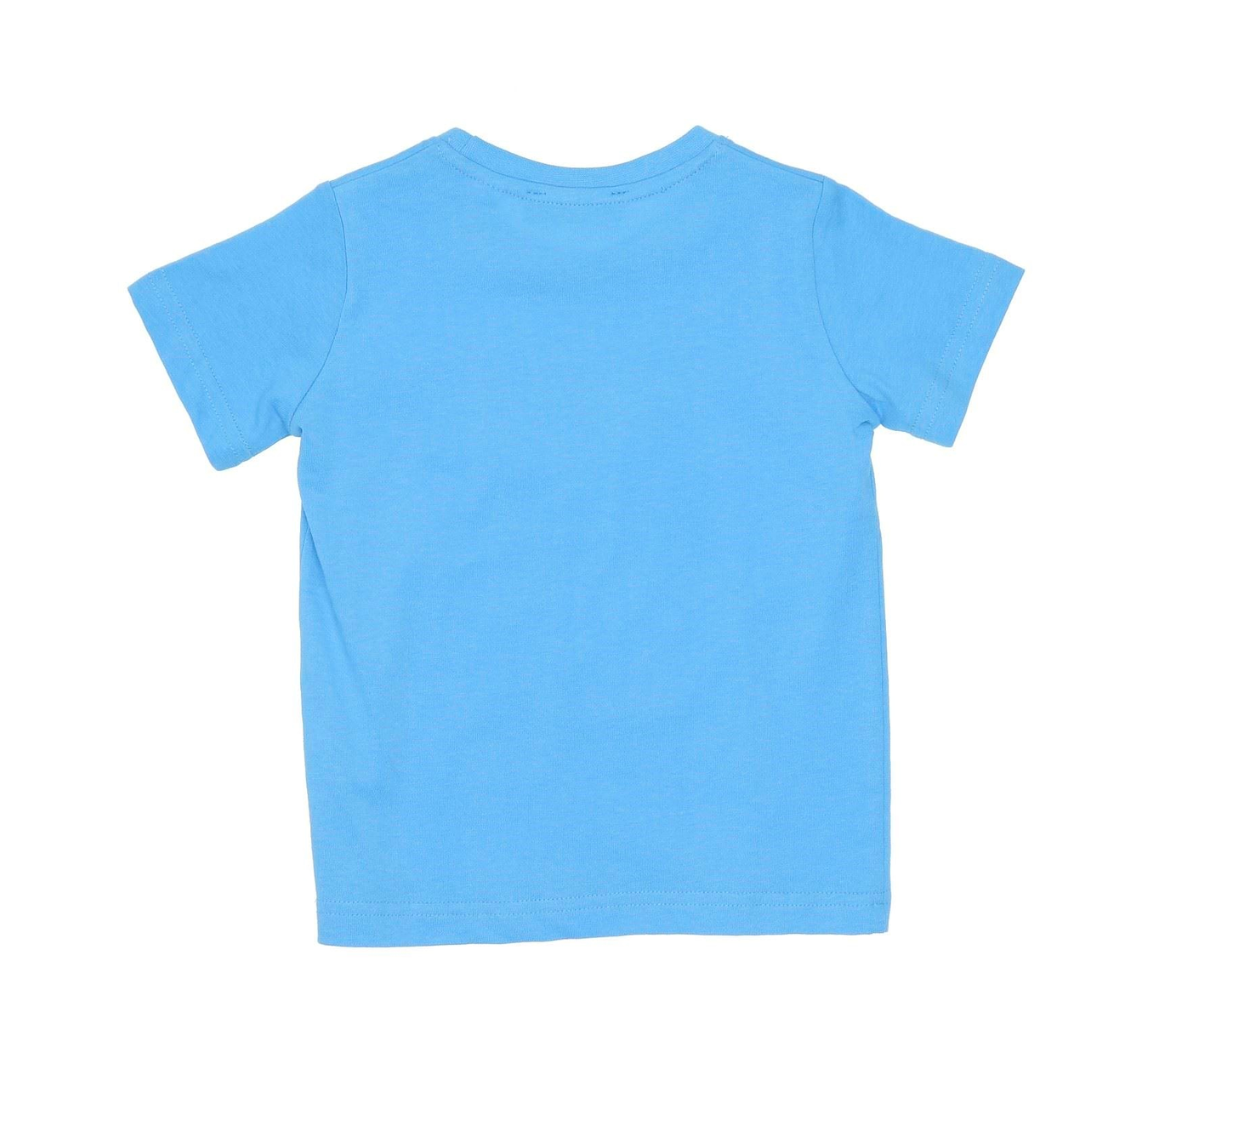 HARMONT & BLAINE - T-shirt bleu teckels - 2 ans